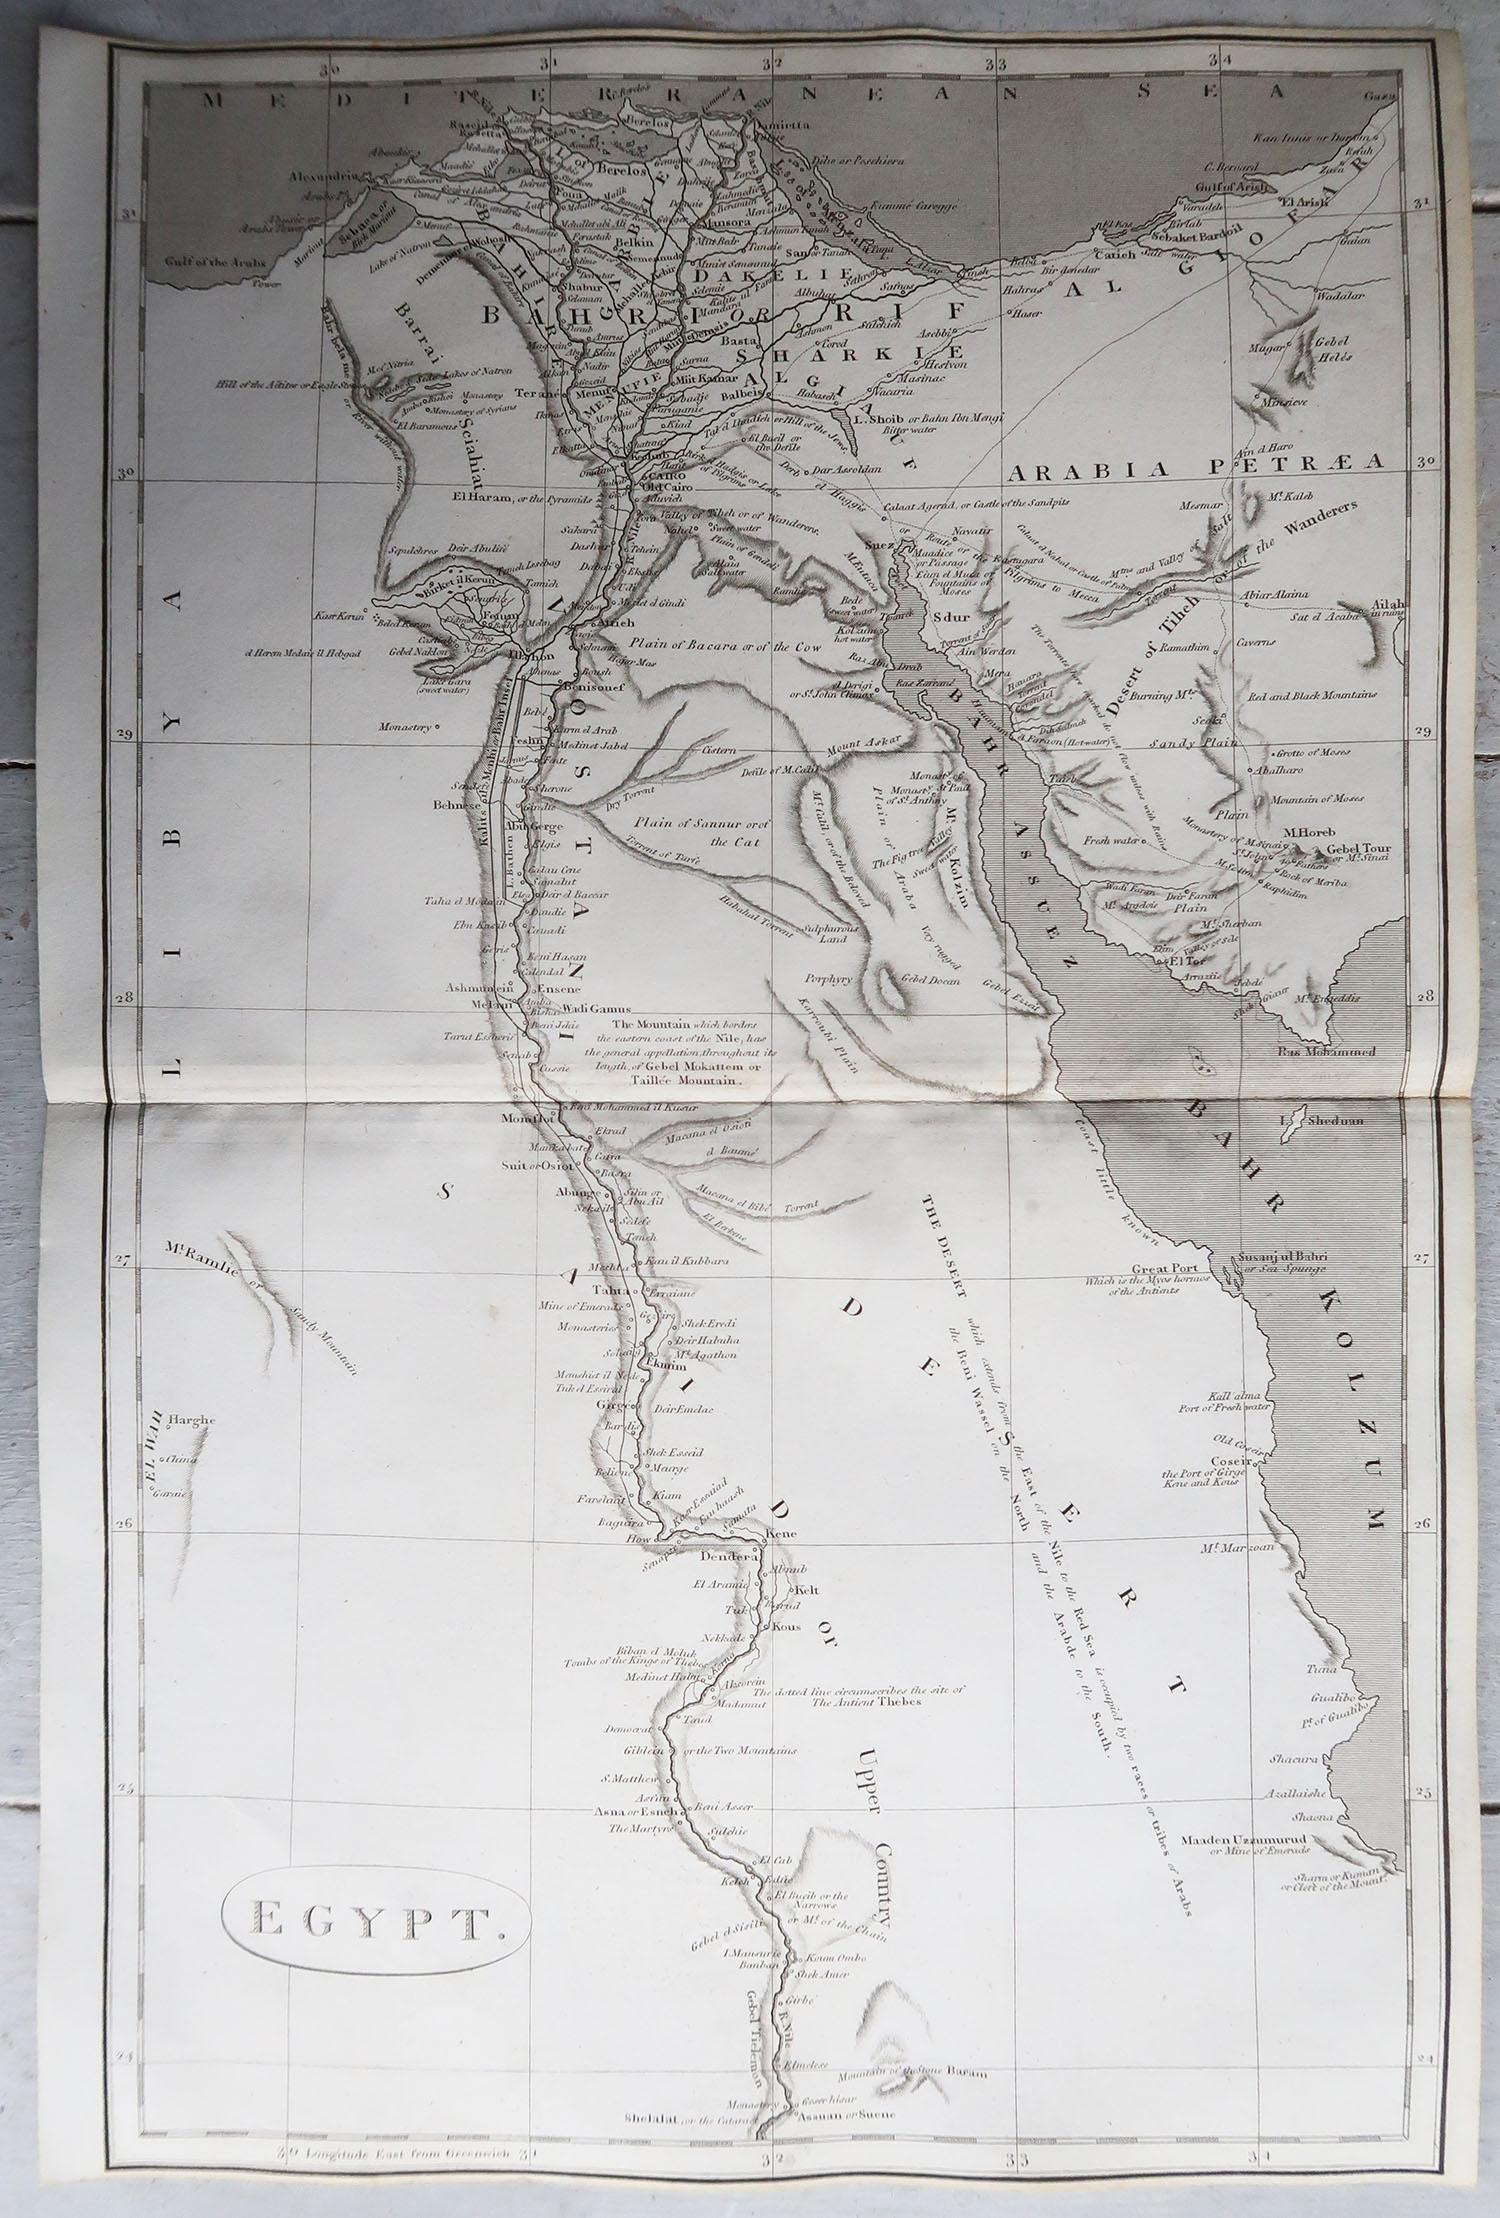 English Original Antique Map of Egypt, Arrowsmith, 1820